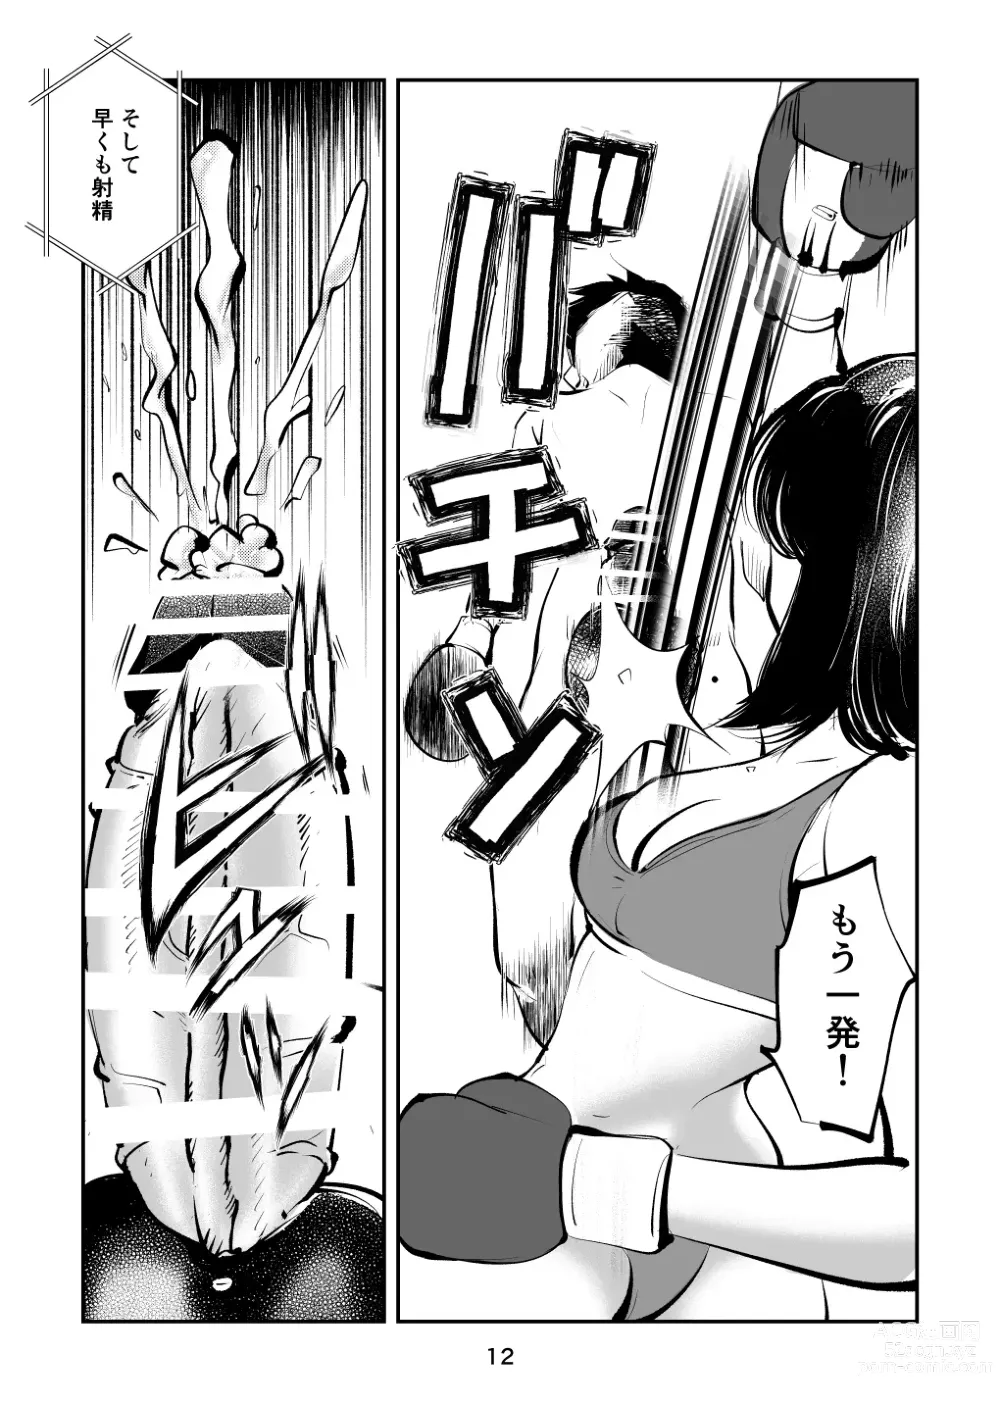 Page 12 of doujinshi Maso Boko Kickboxing 2